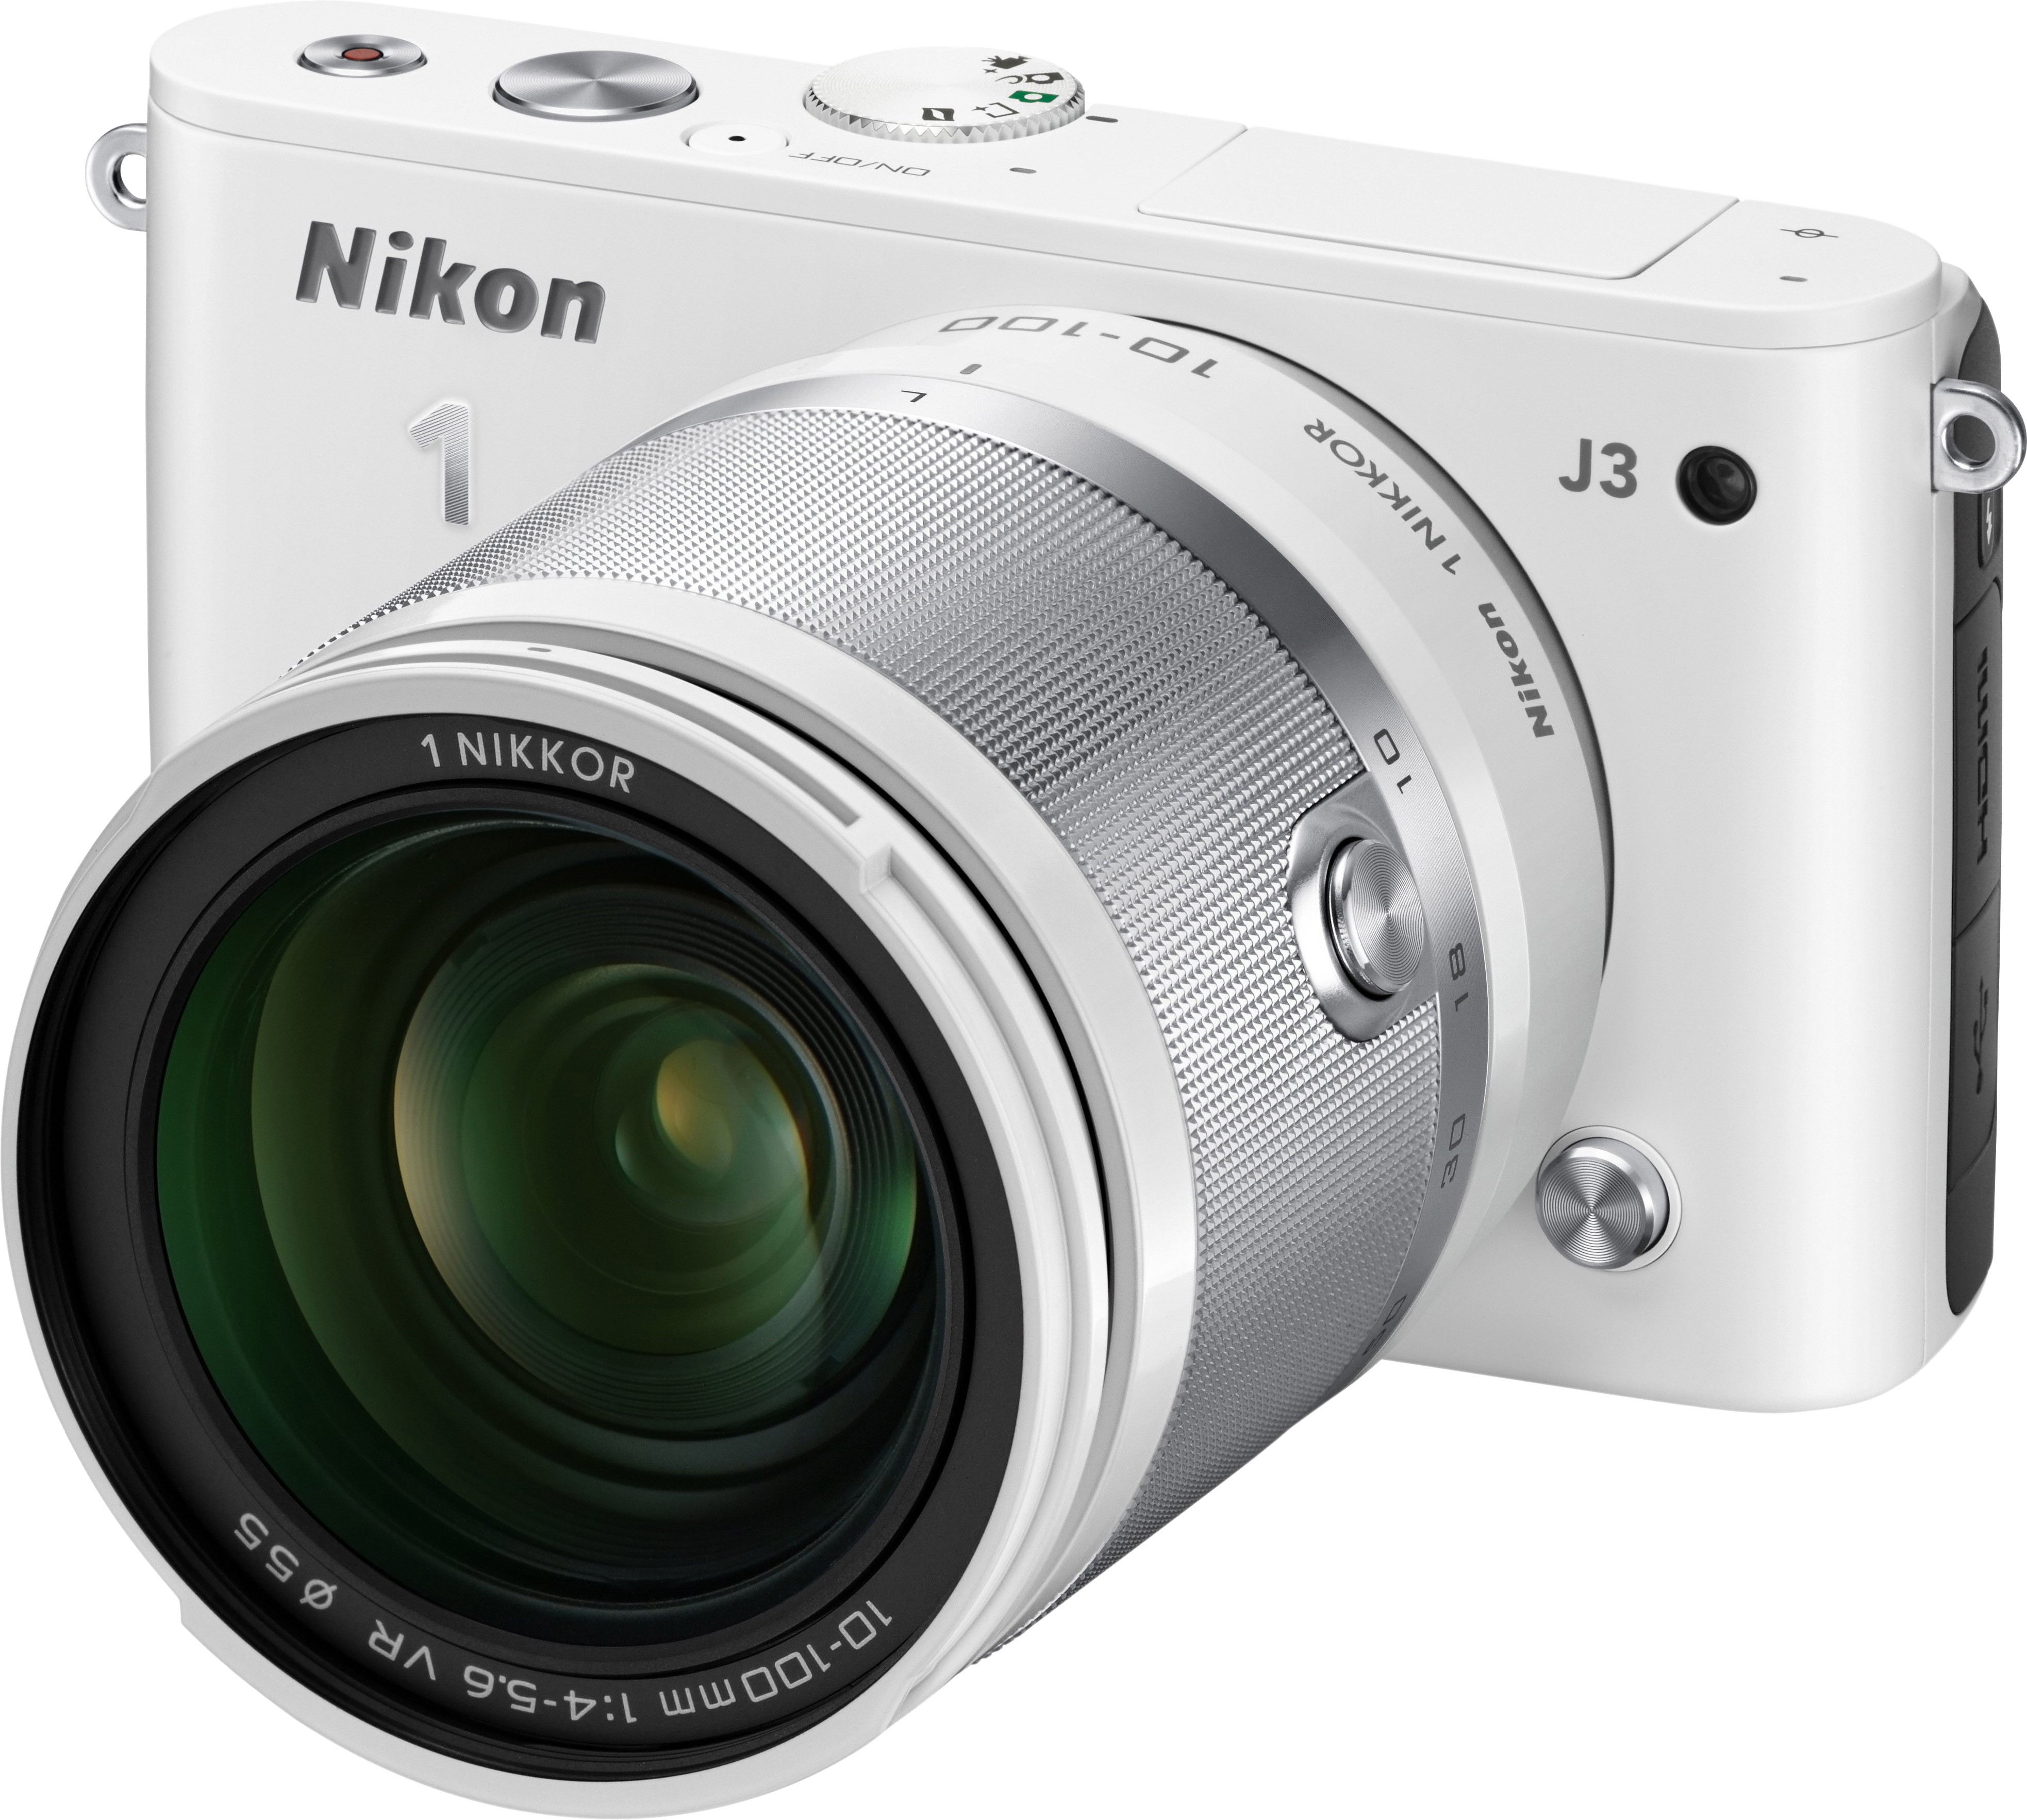 Nikon 1 J3 14.2 MP HD Digital Camera | The Price Deals